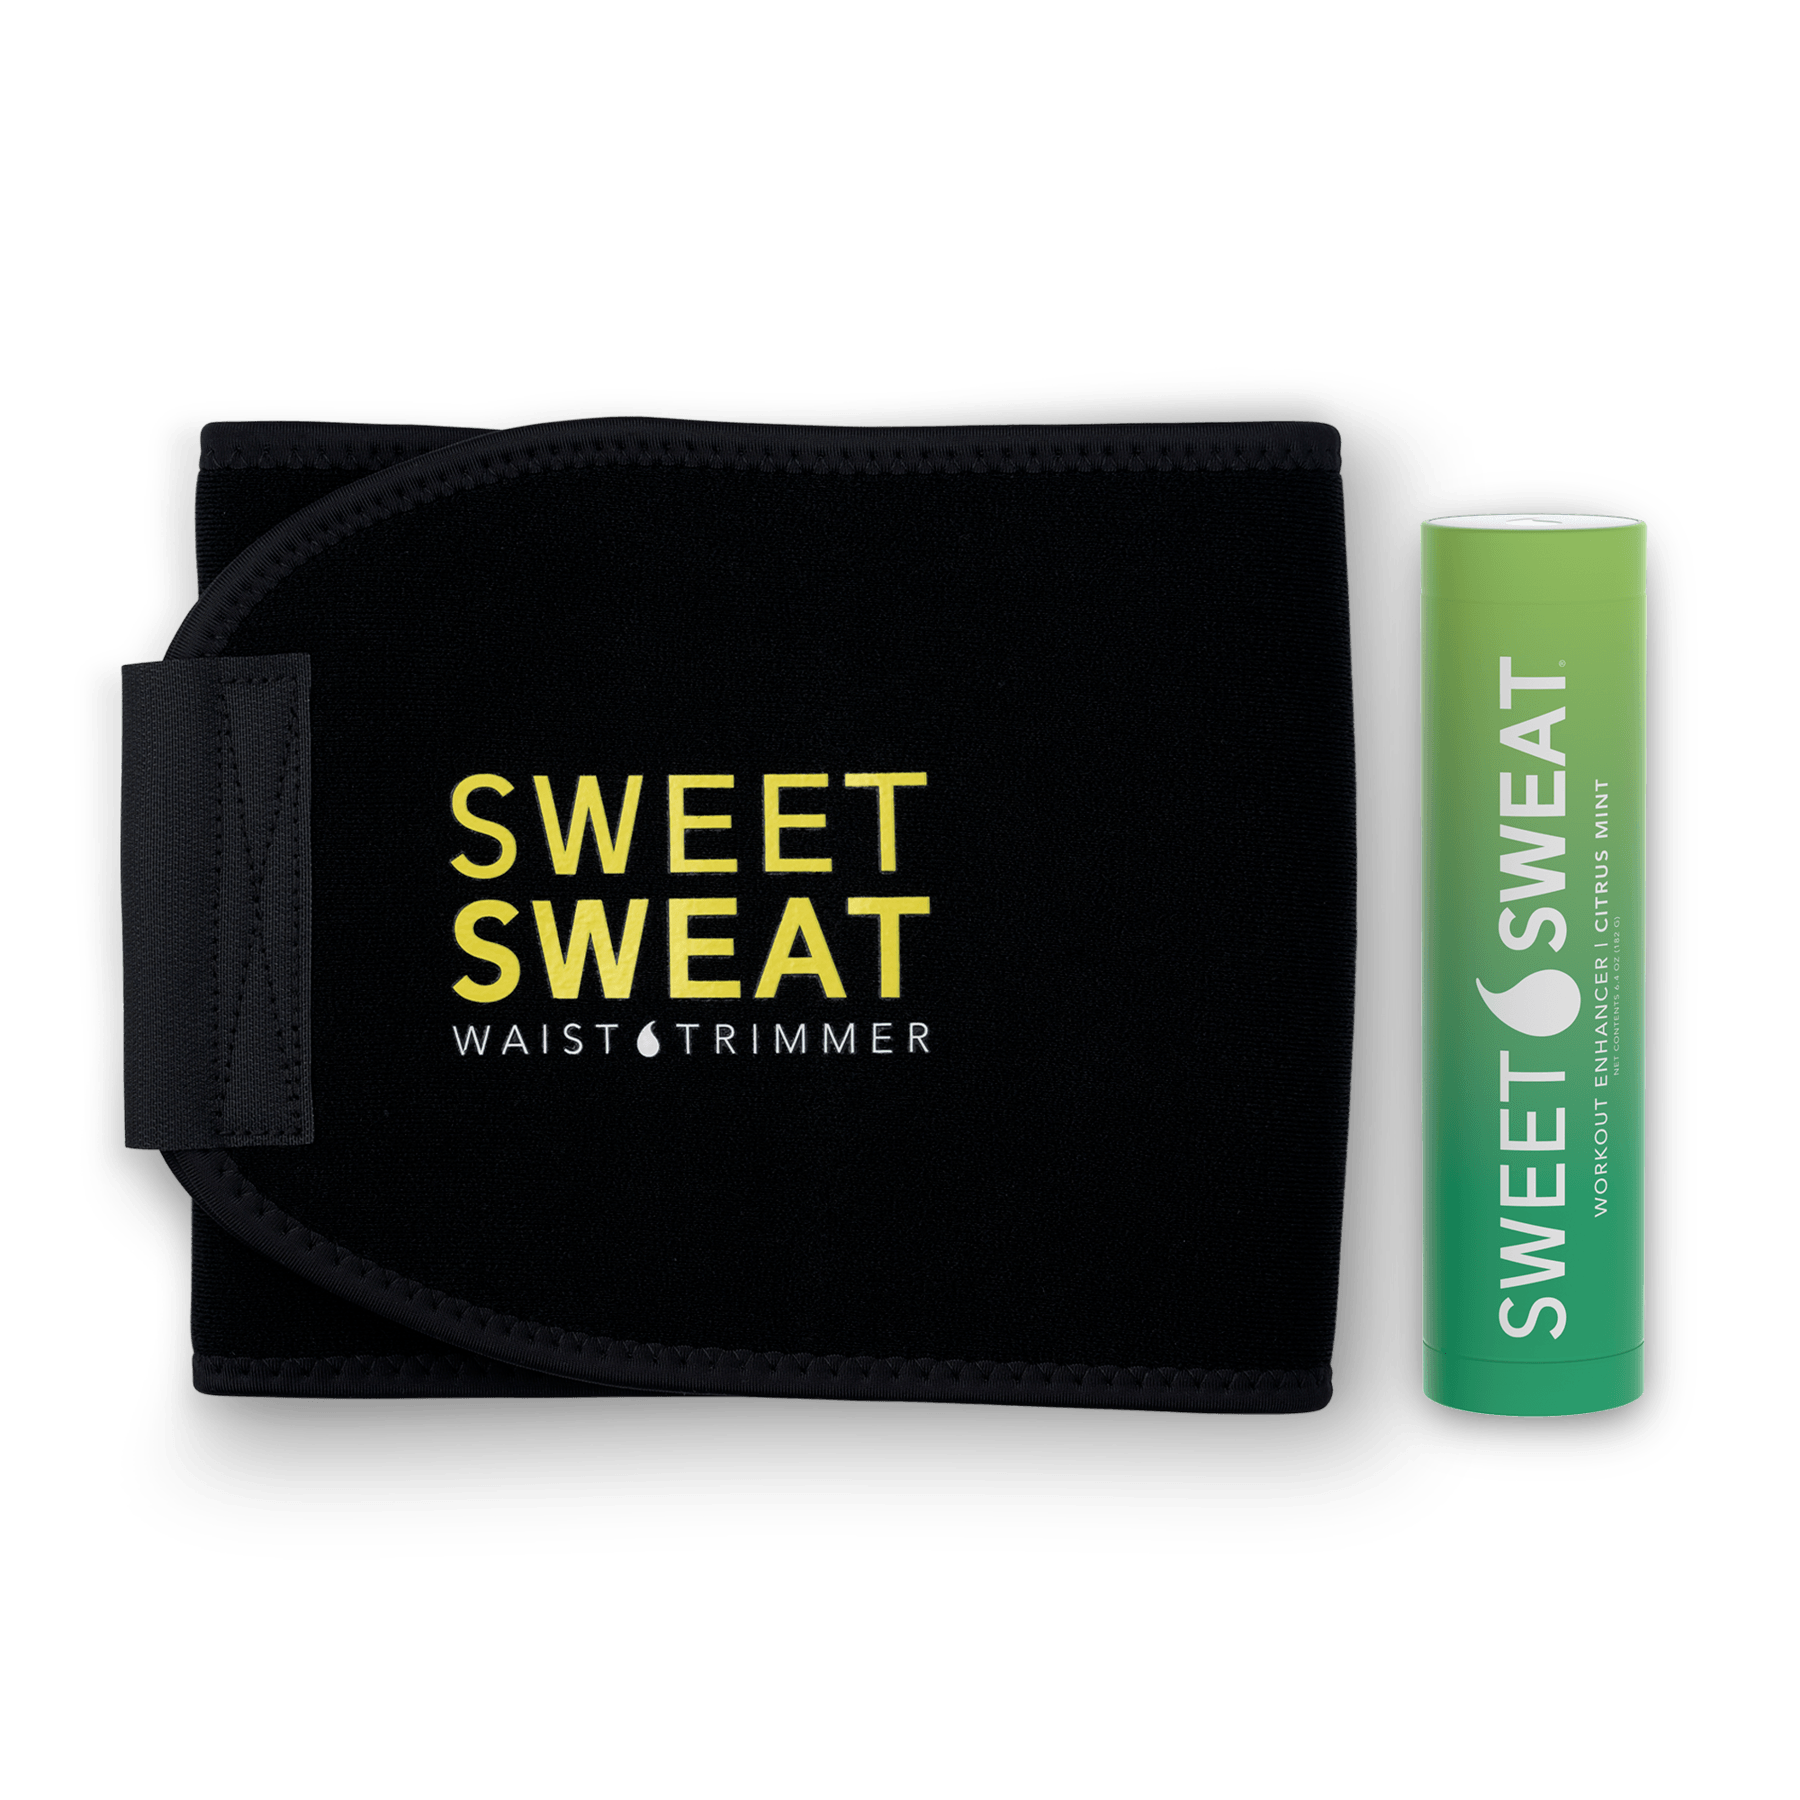 Sweet Sweat® Bundle with Trimmer & Sweet Sweat® Stick by Sweet Sweat, workout kit.